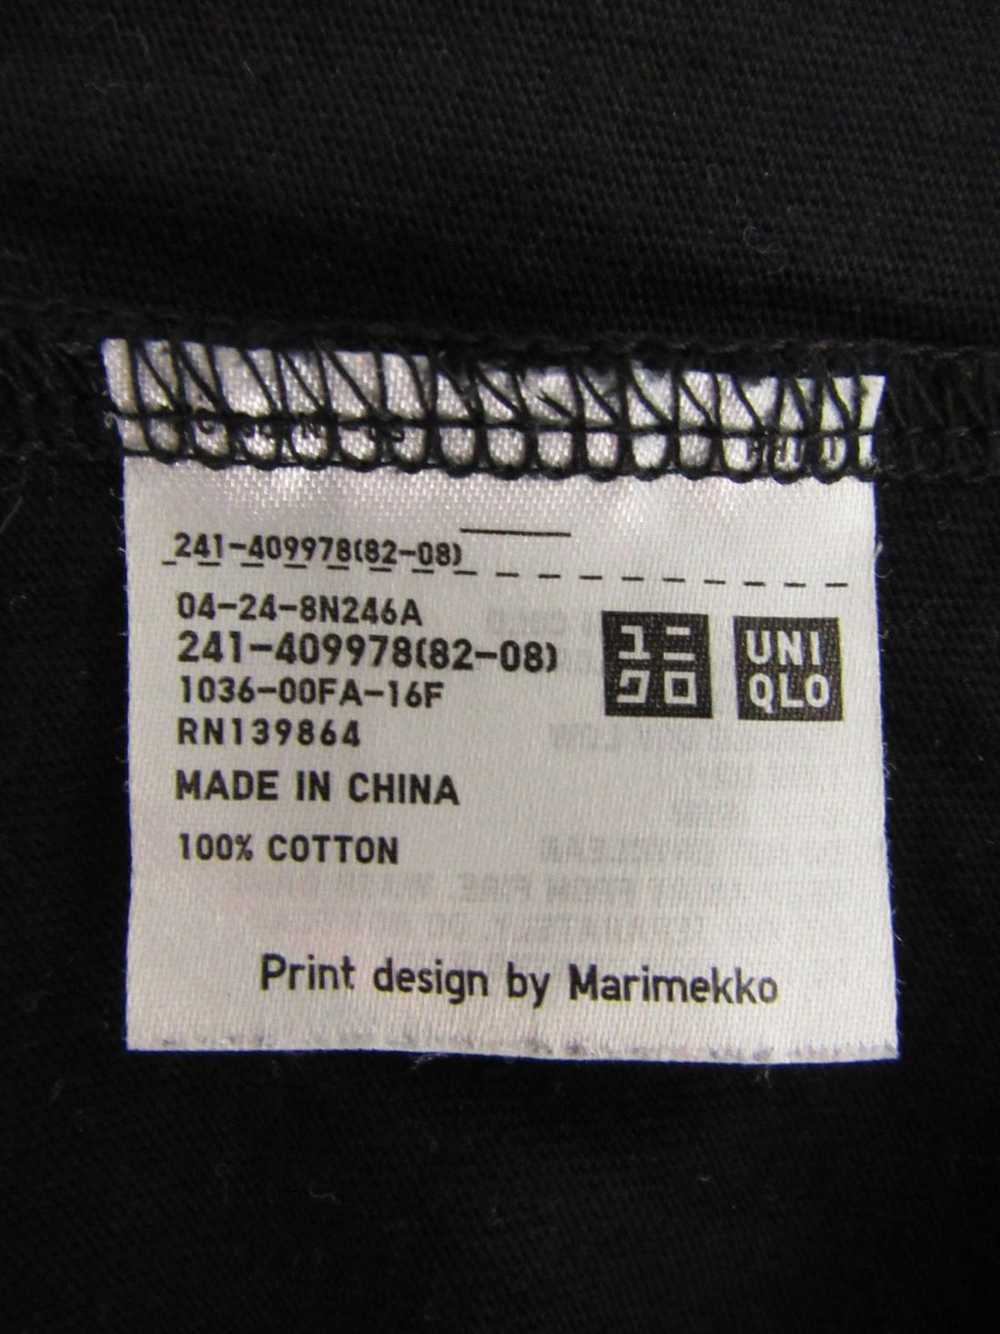 Marimekko Uni Qlo T-Shirt Top - image 4